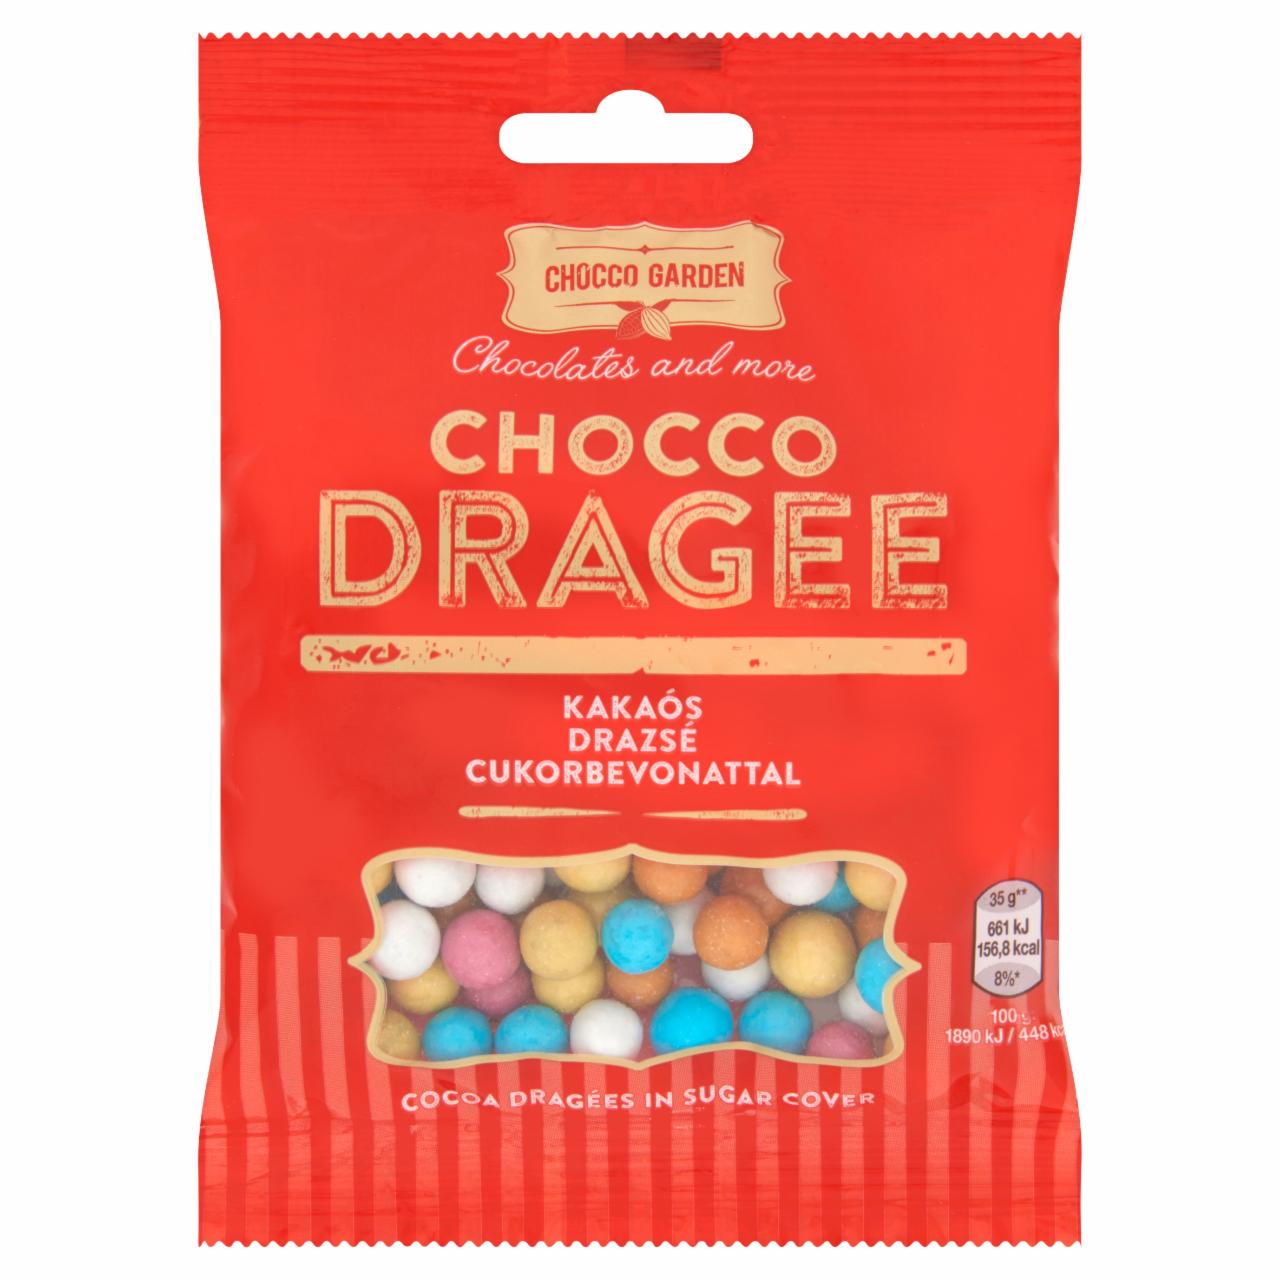 Képek - Chocco Garden Chocco Dragee kakaós drazsé cukorbevonattal 70 g